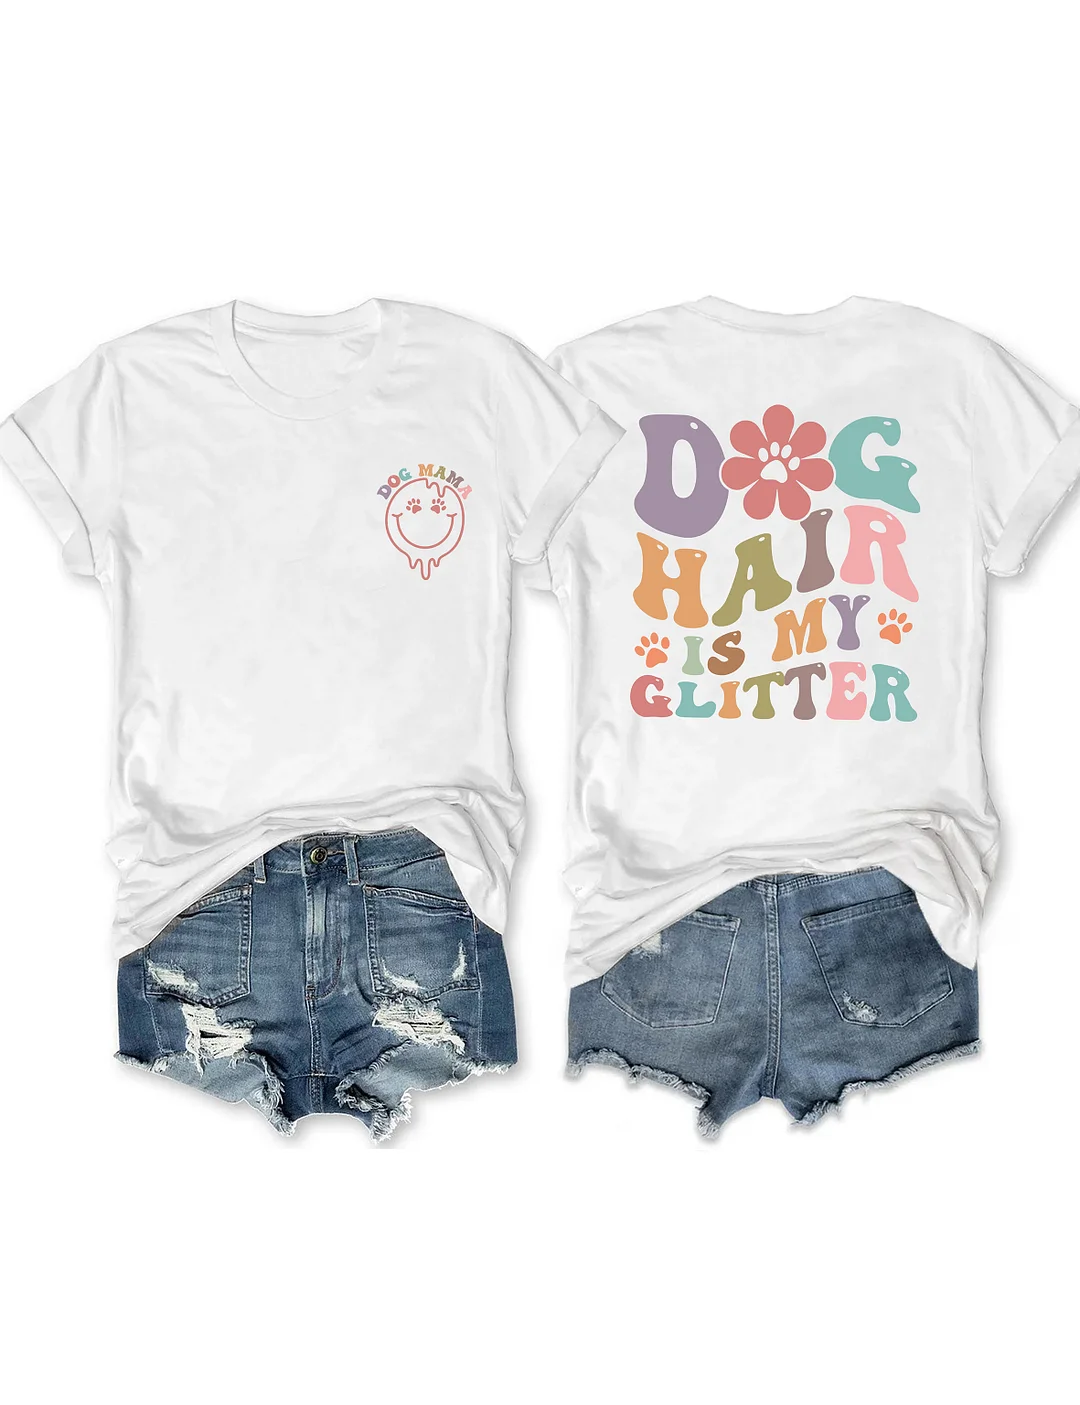 Dog Hair Is My Glitter T-shirt